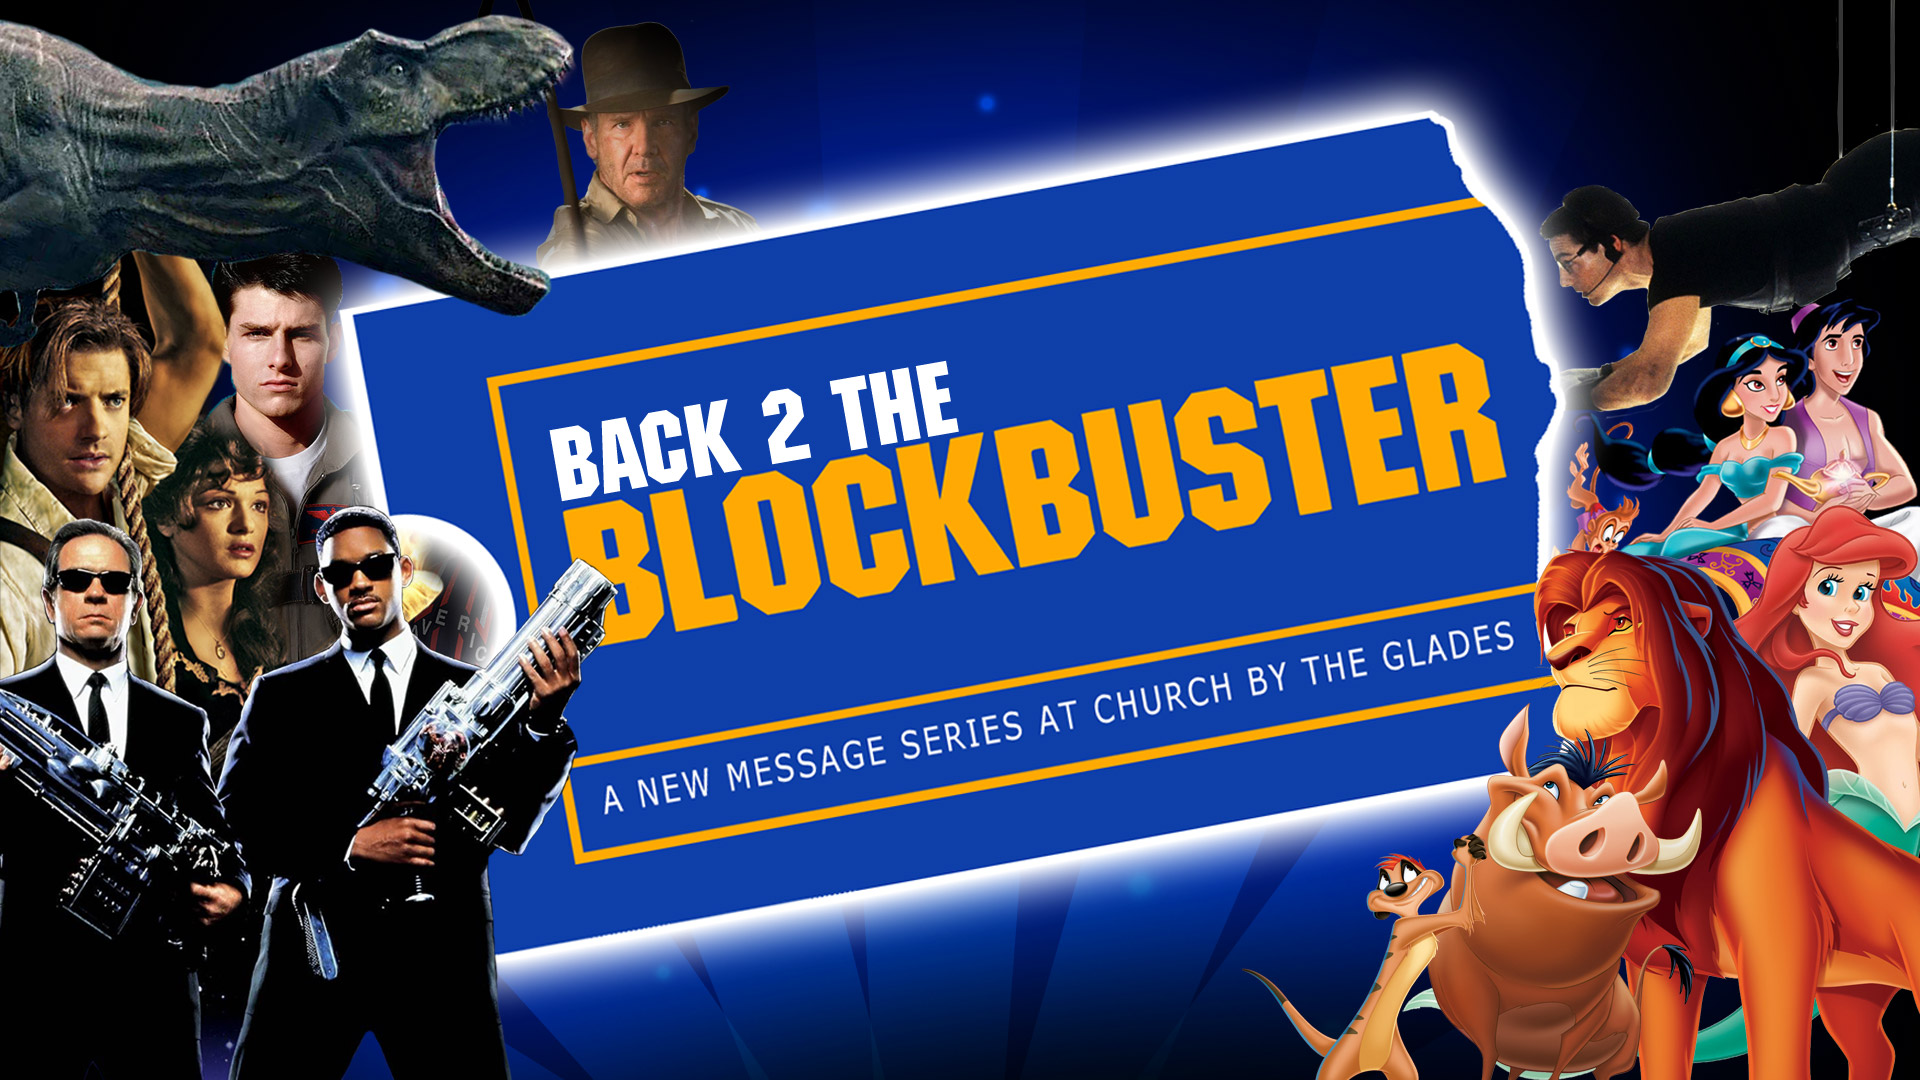   Back 2 the Blockbuster 